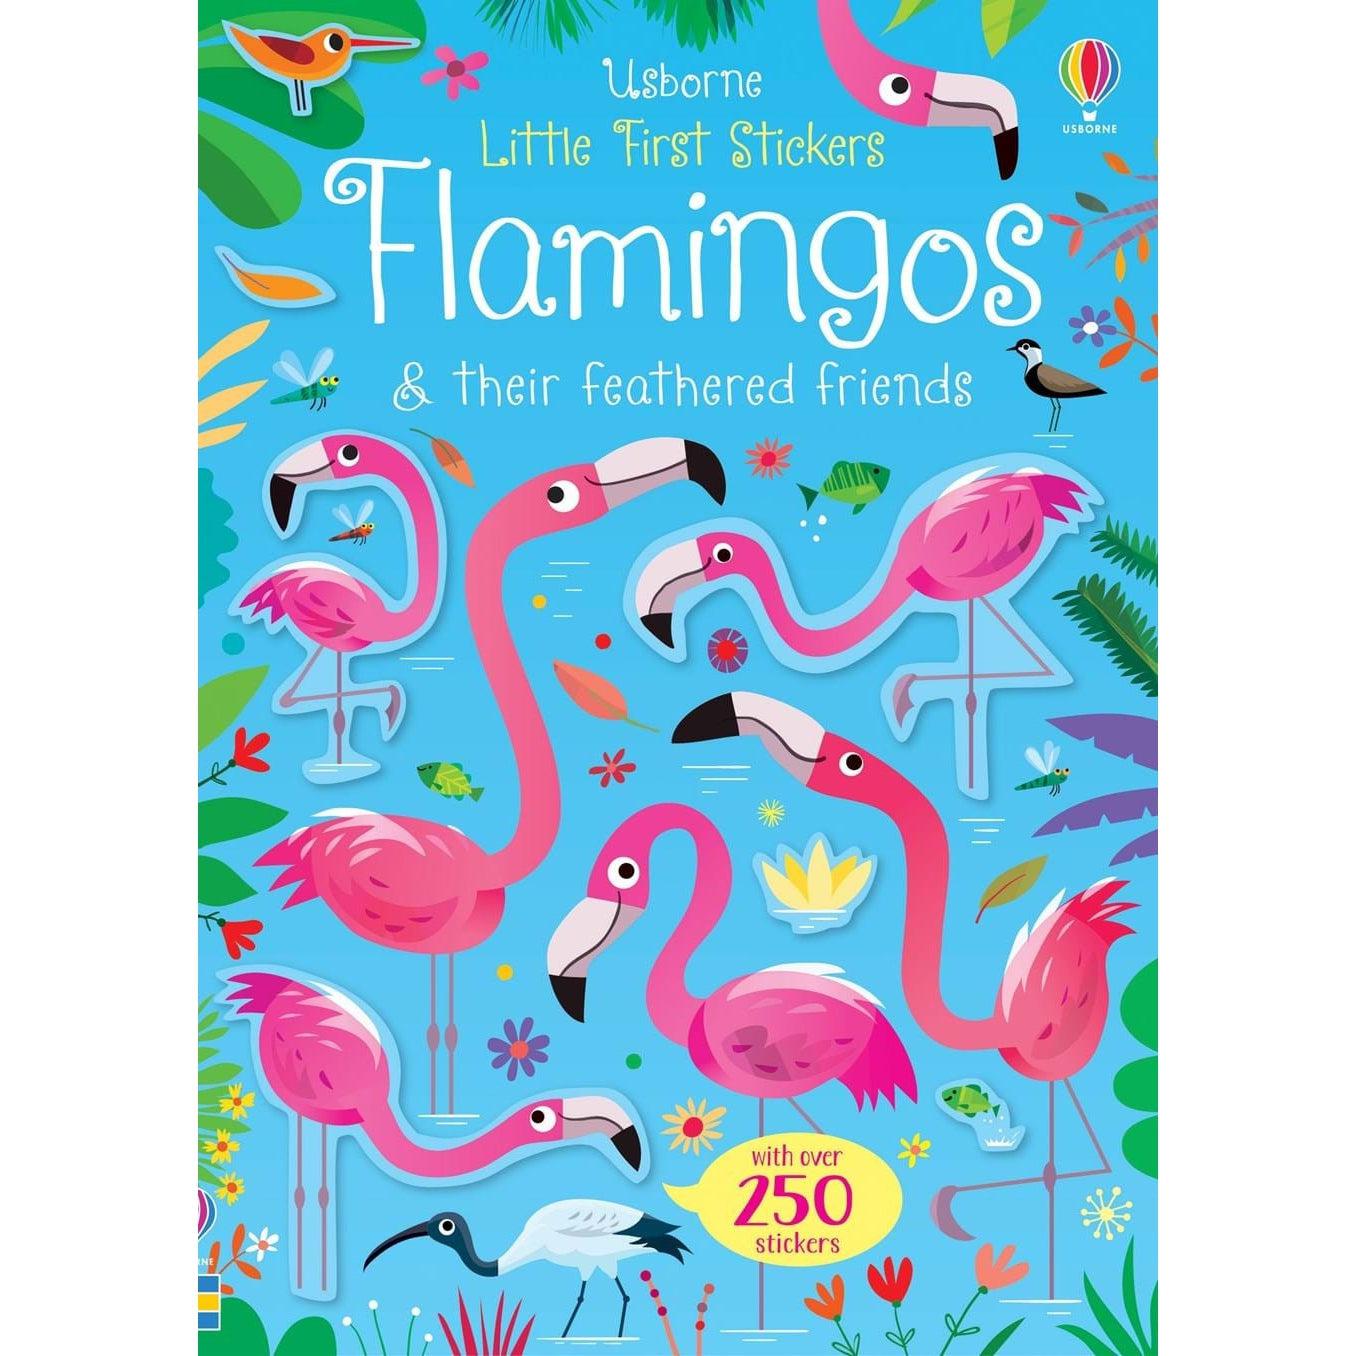 Little First Stickers Flamingos - Gareth Lucas